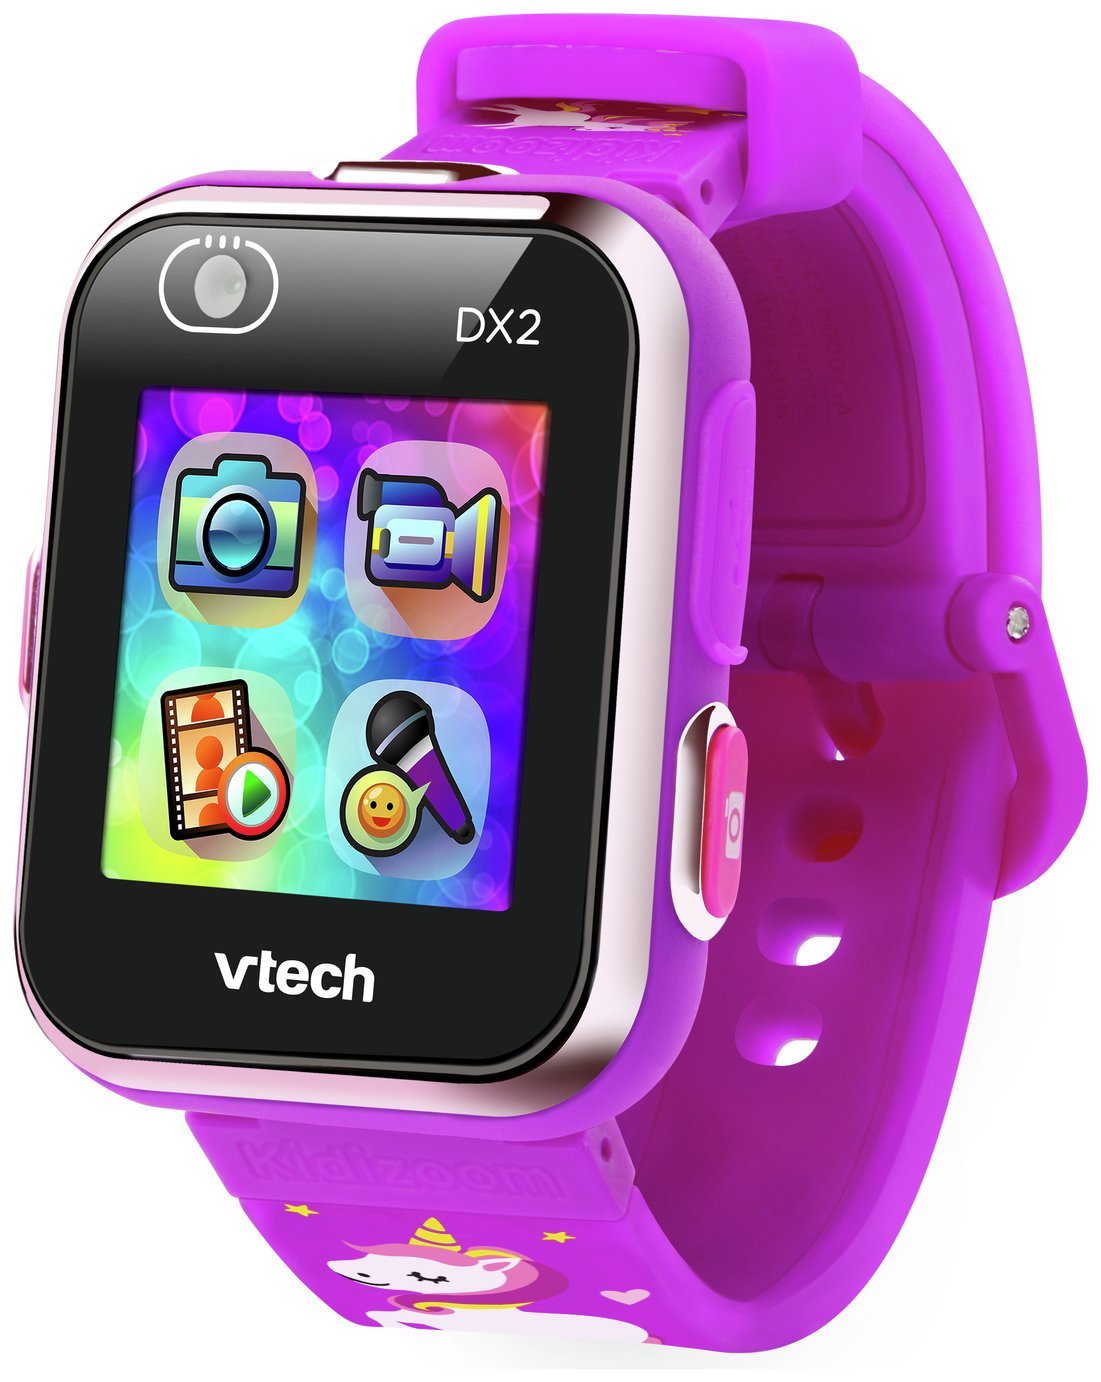 vtech kidizoom smartwatch dx smart watch